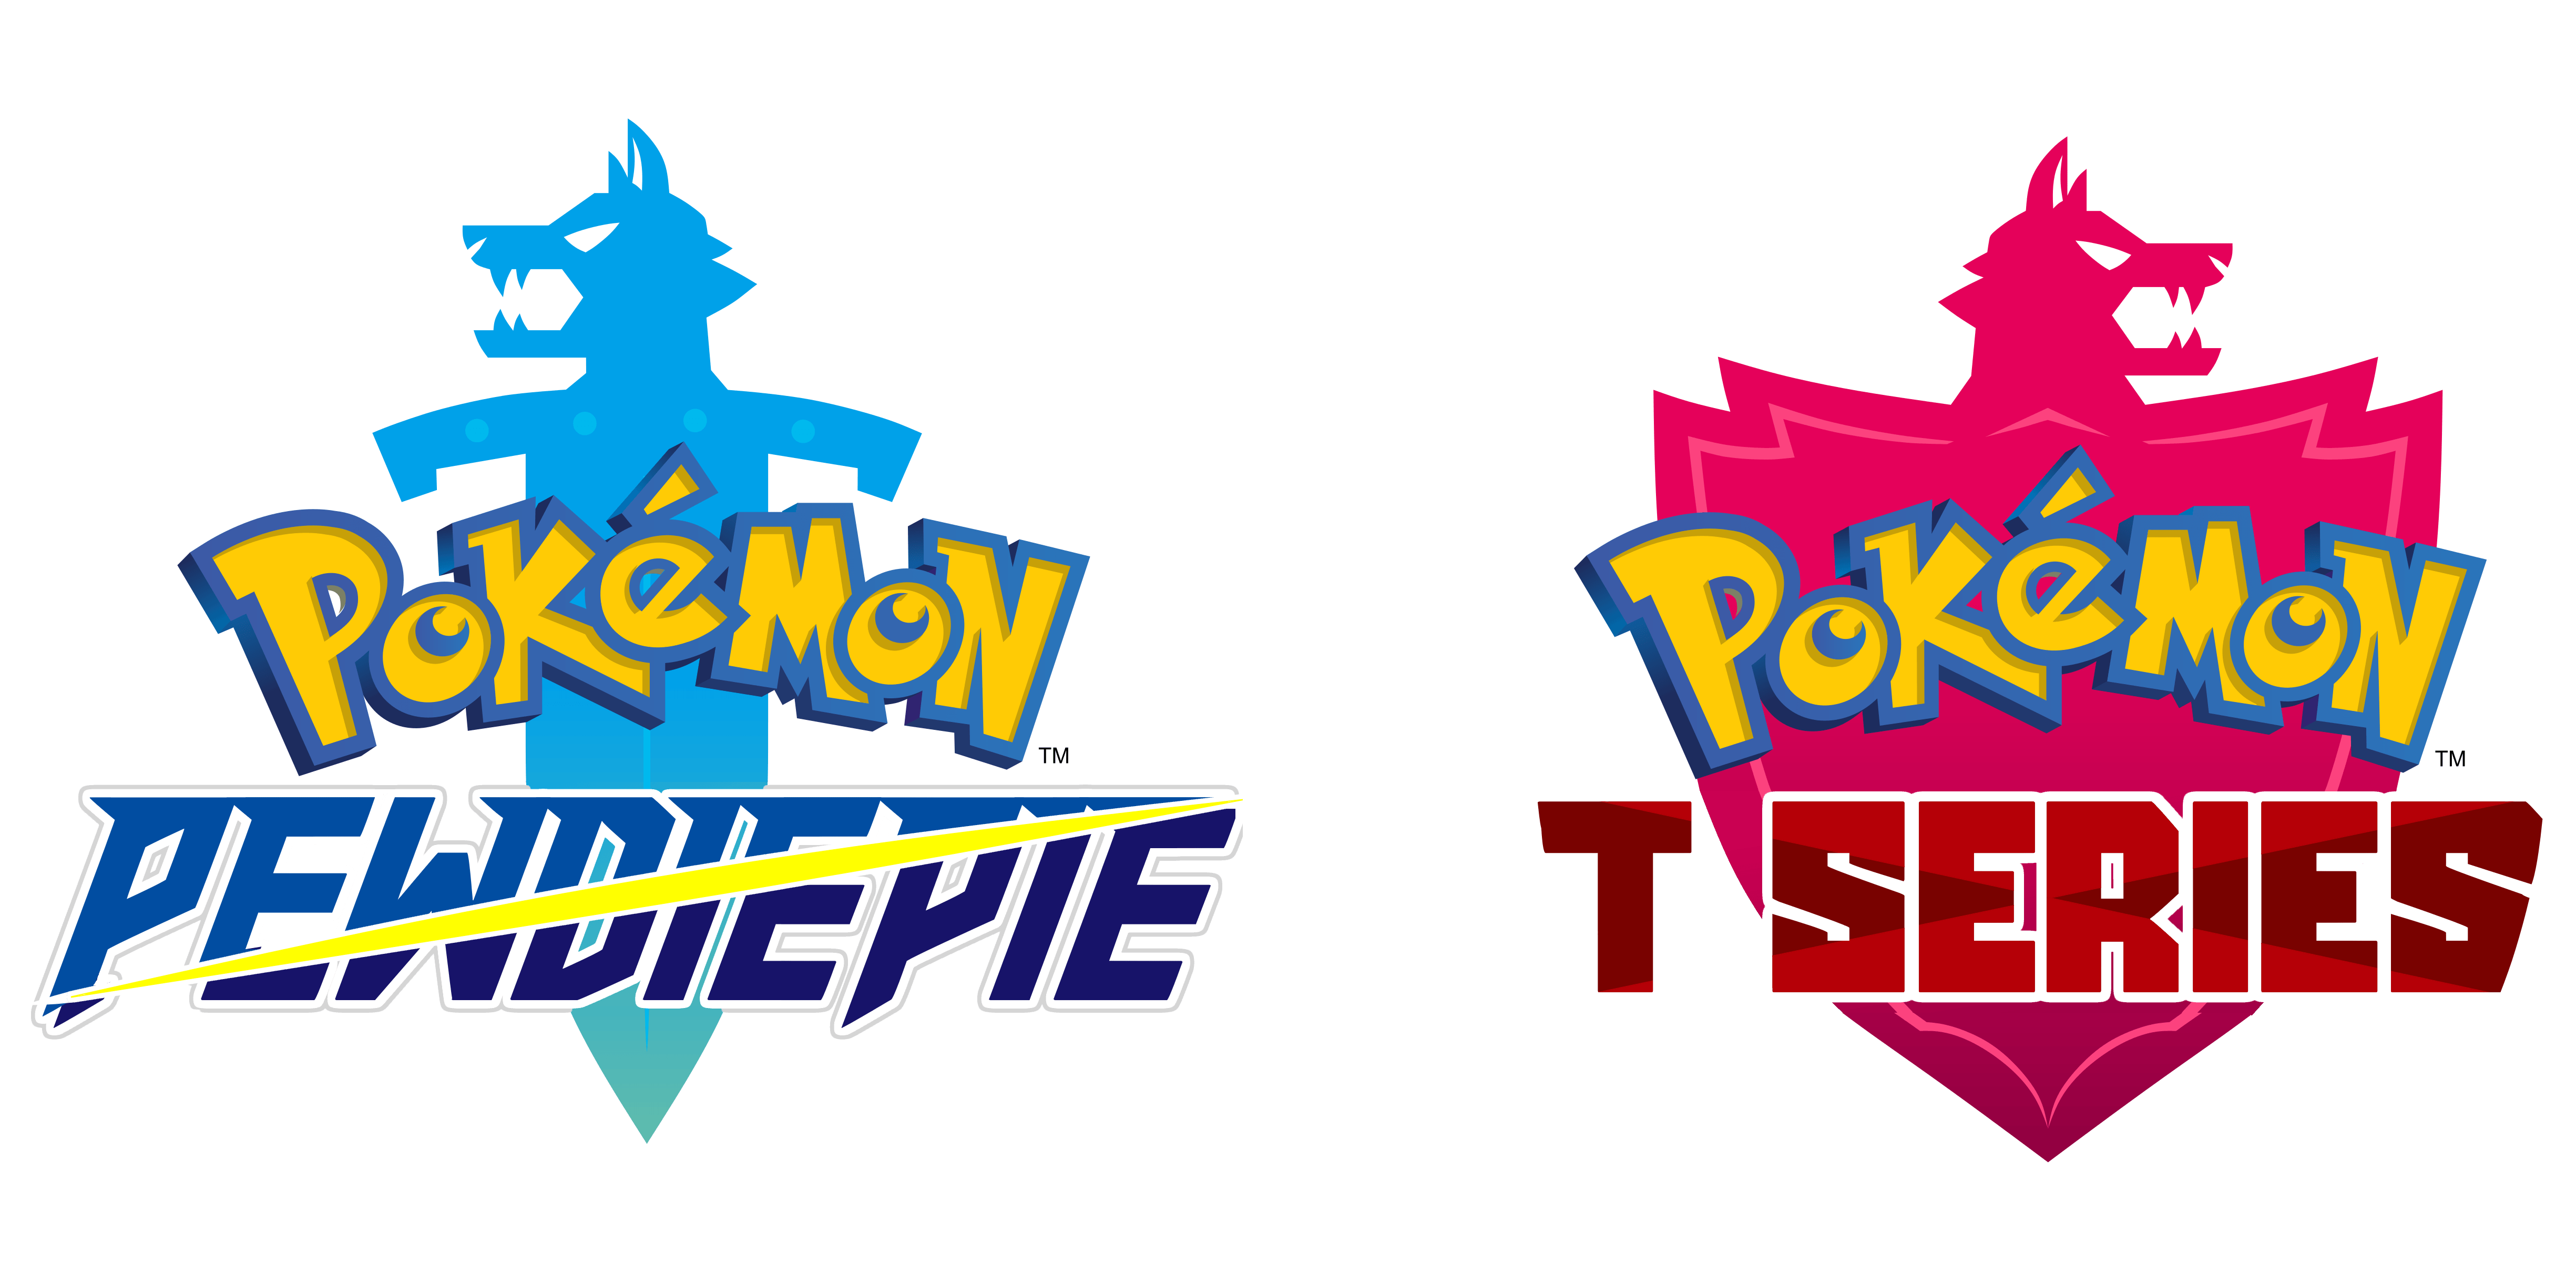 Pokeman Logo - Pewdiepie Vs T Series Pokemon Logo. Pokémon Sword And Shield. Know